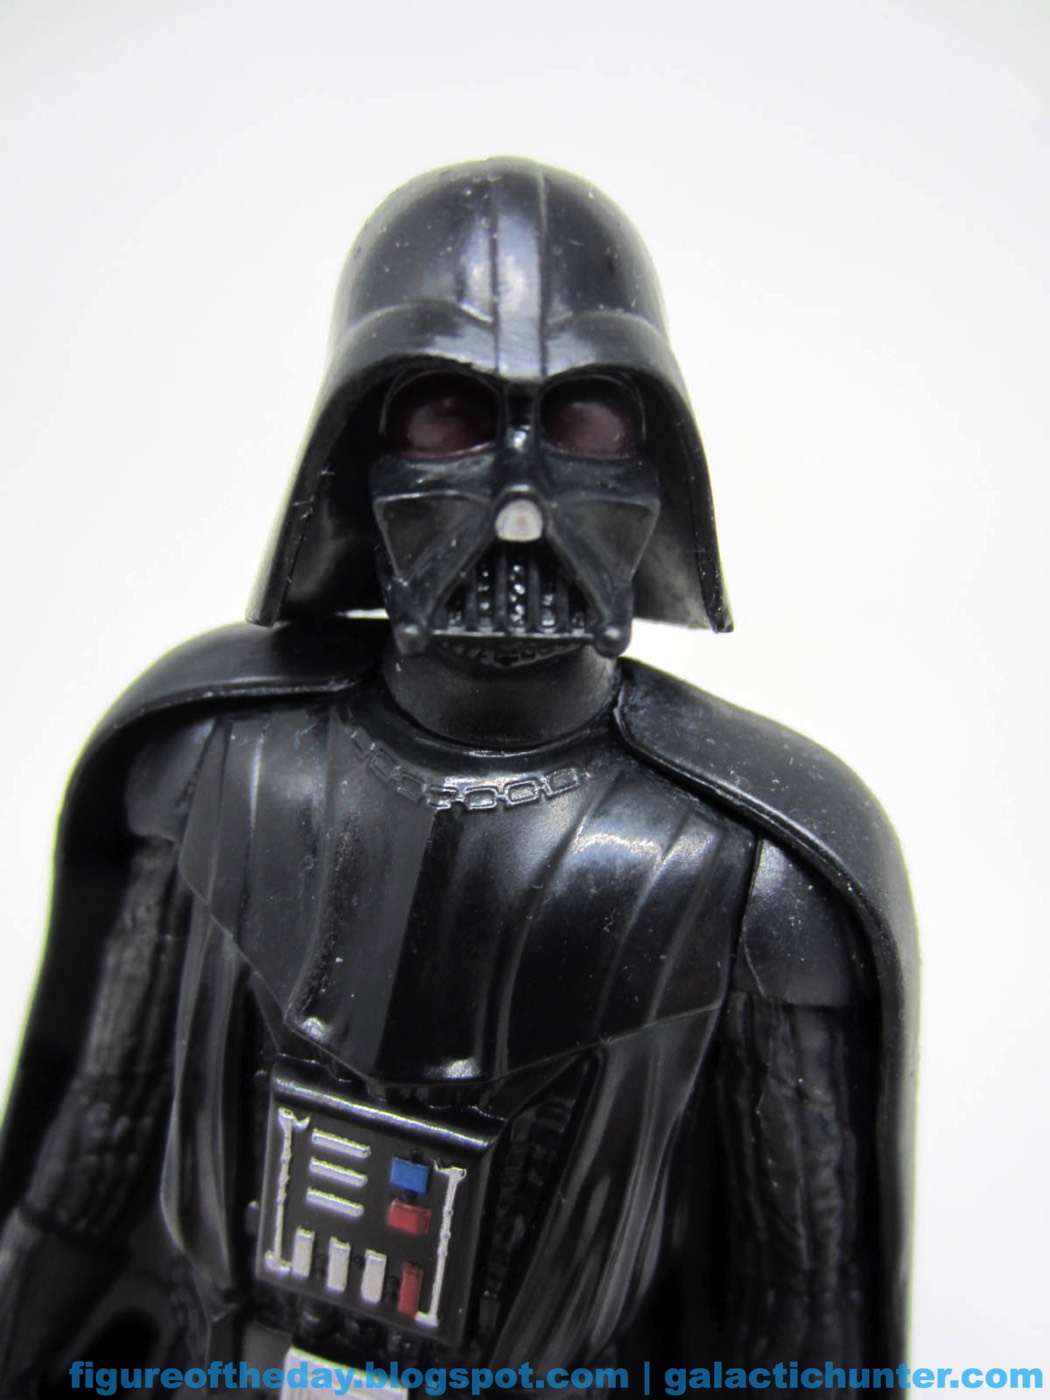 Star Wars The Force Awakens Darth Vader - Afbeeldingen van star wars the force awakens darth vader